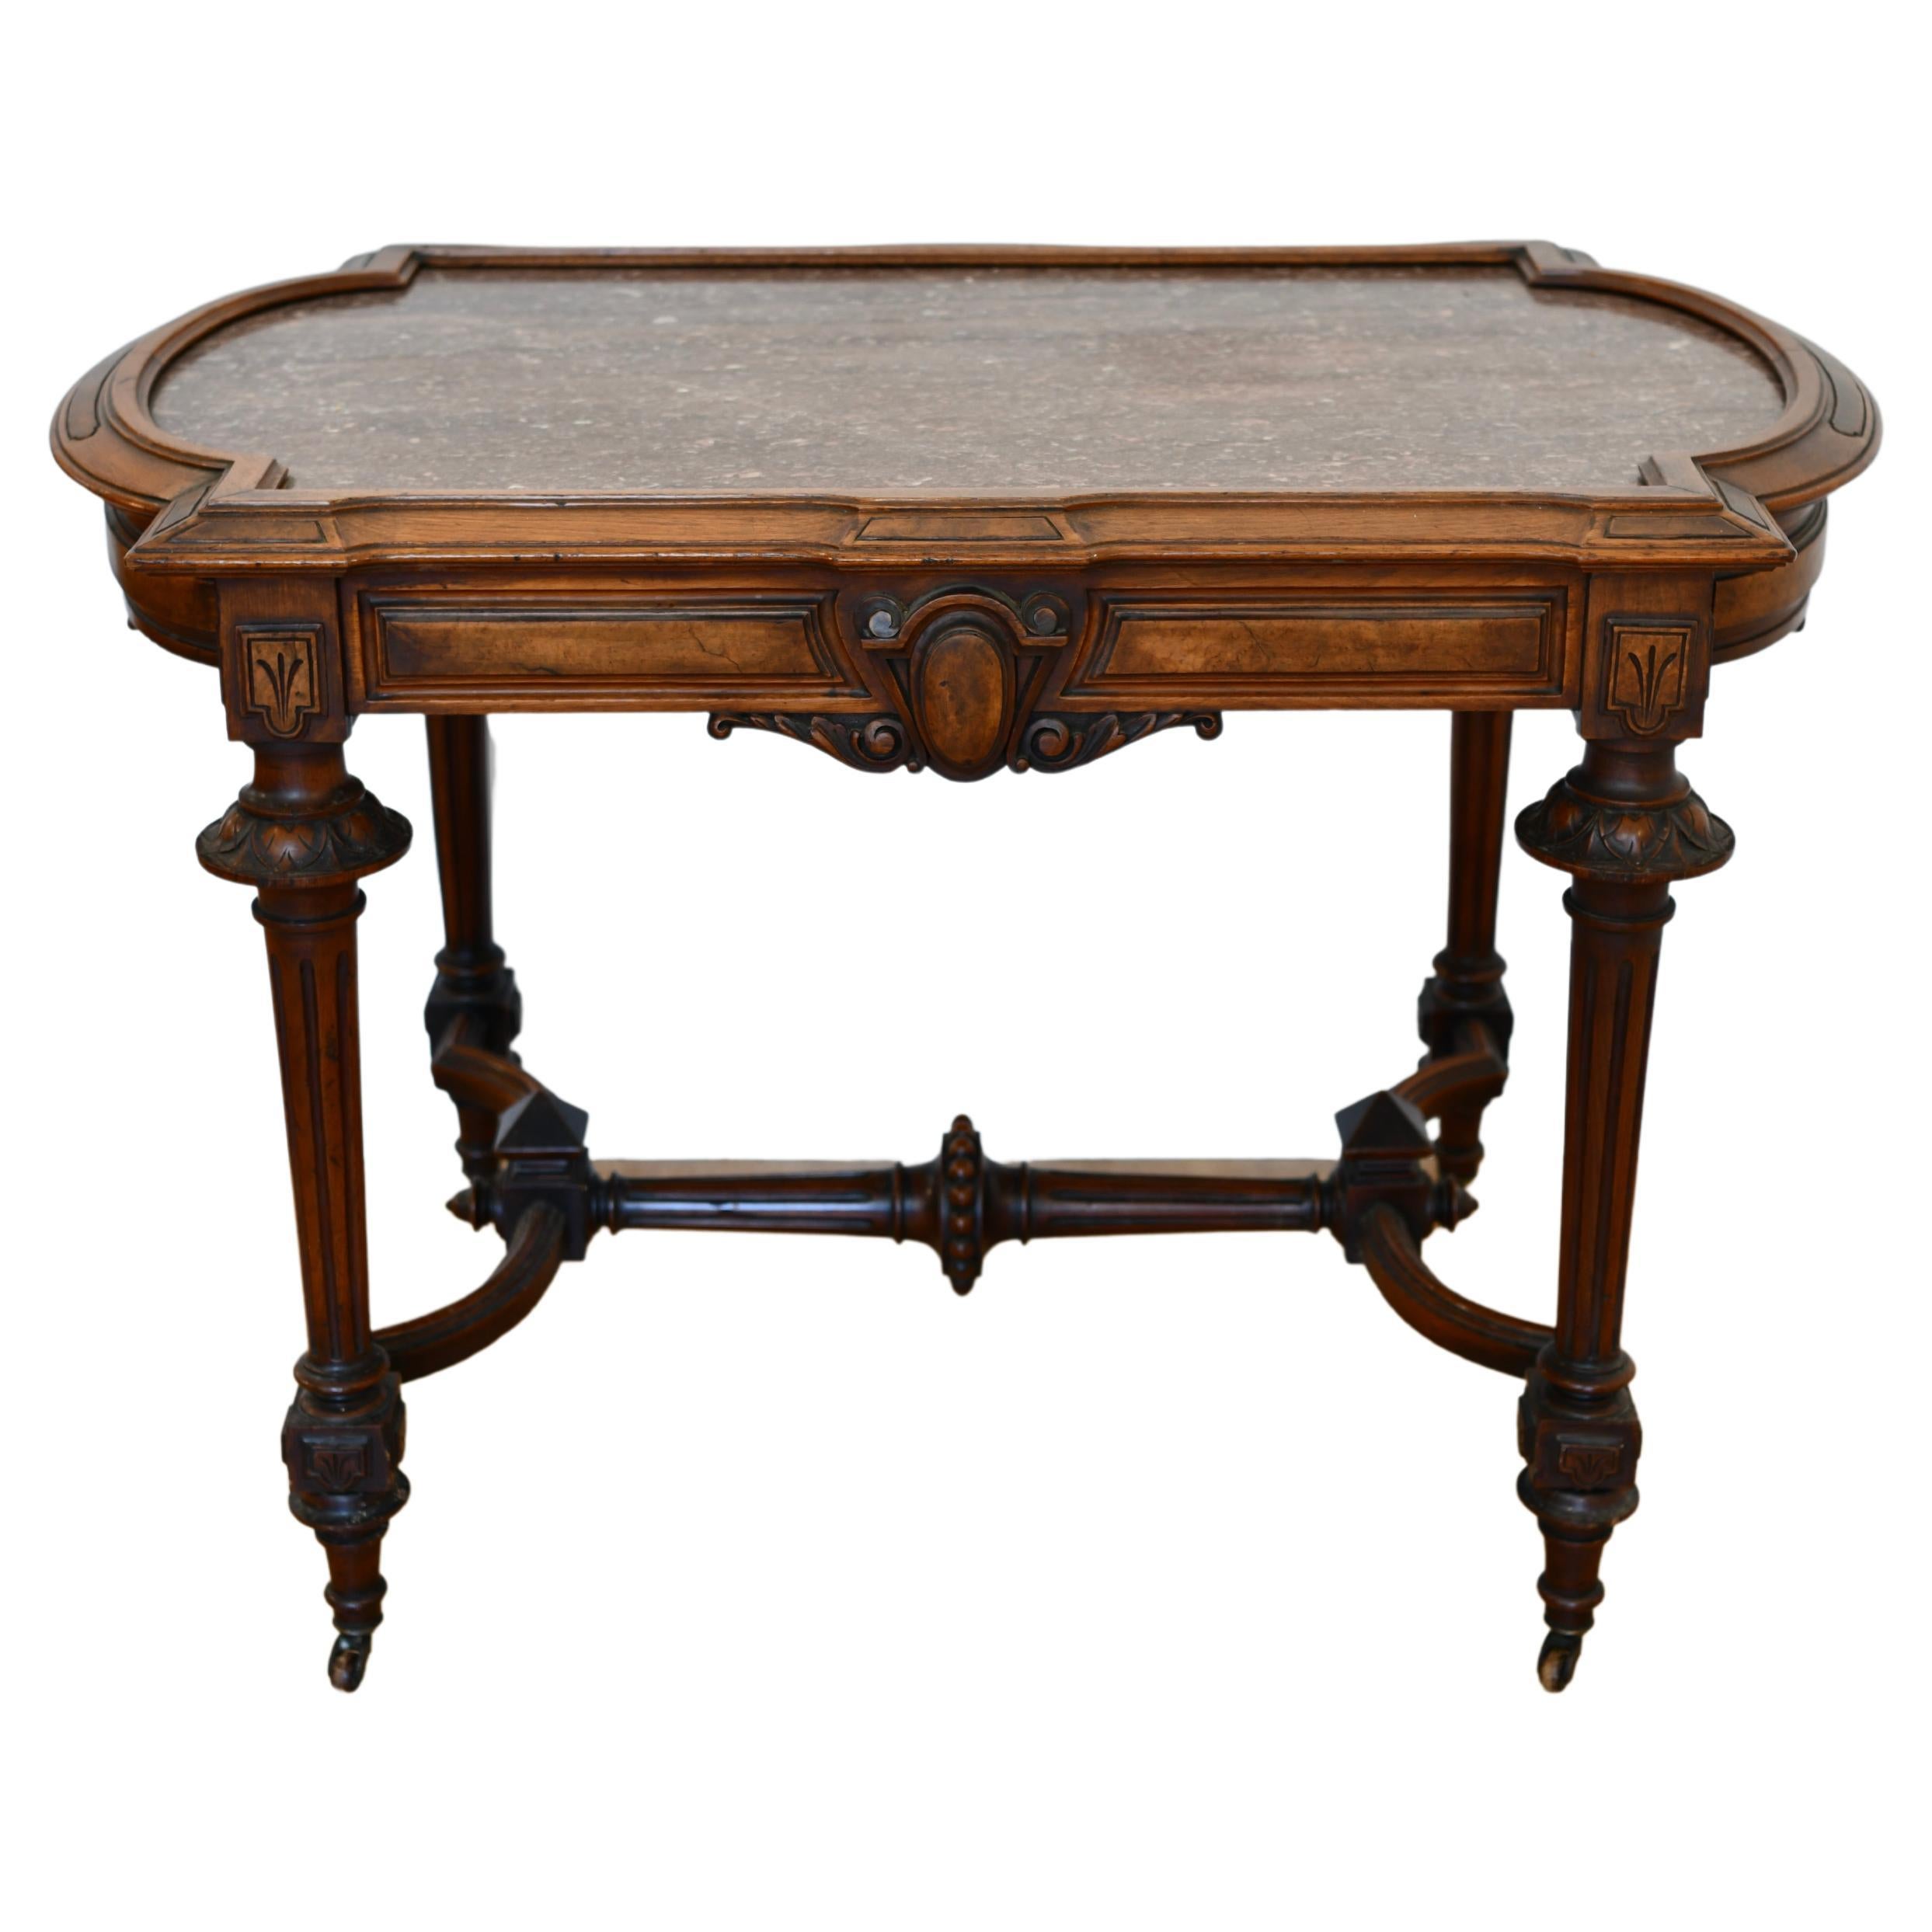 Renaissance Revival Marble Top Table For Sale